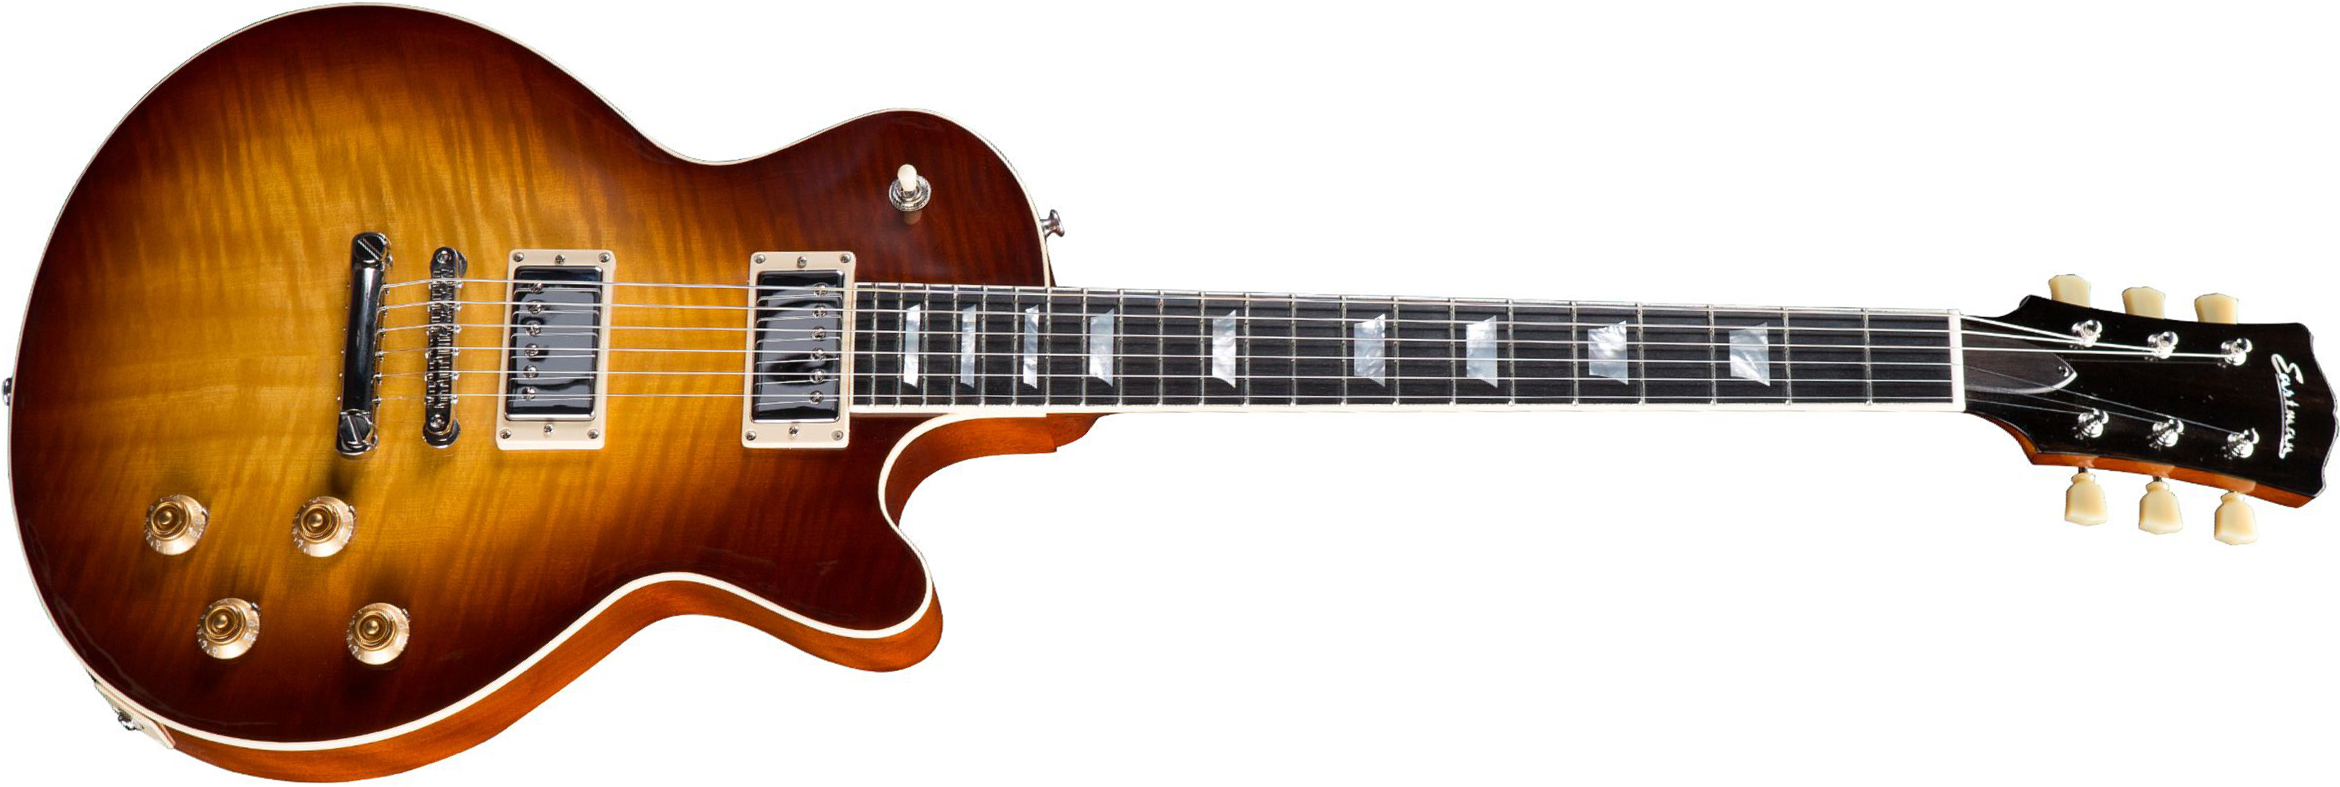 Eastman Sb59 Truetone Hh Seymour Duncan Ht Eb - Goldburst - Single cut electric guitar - Main picture